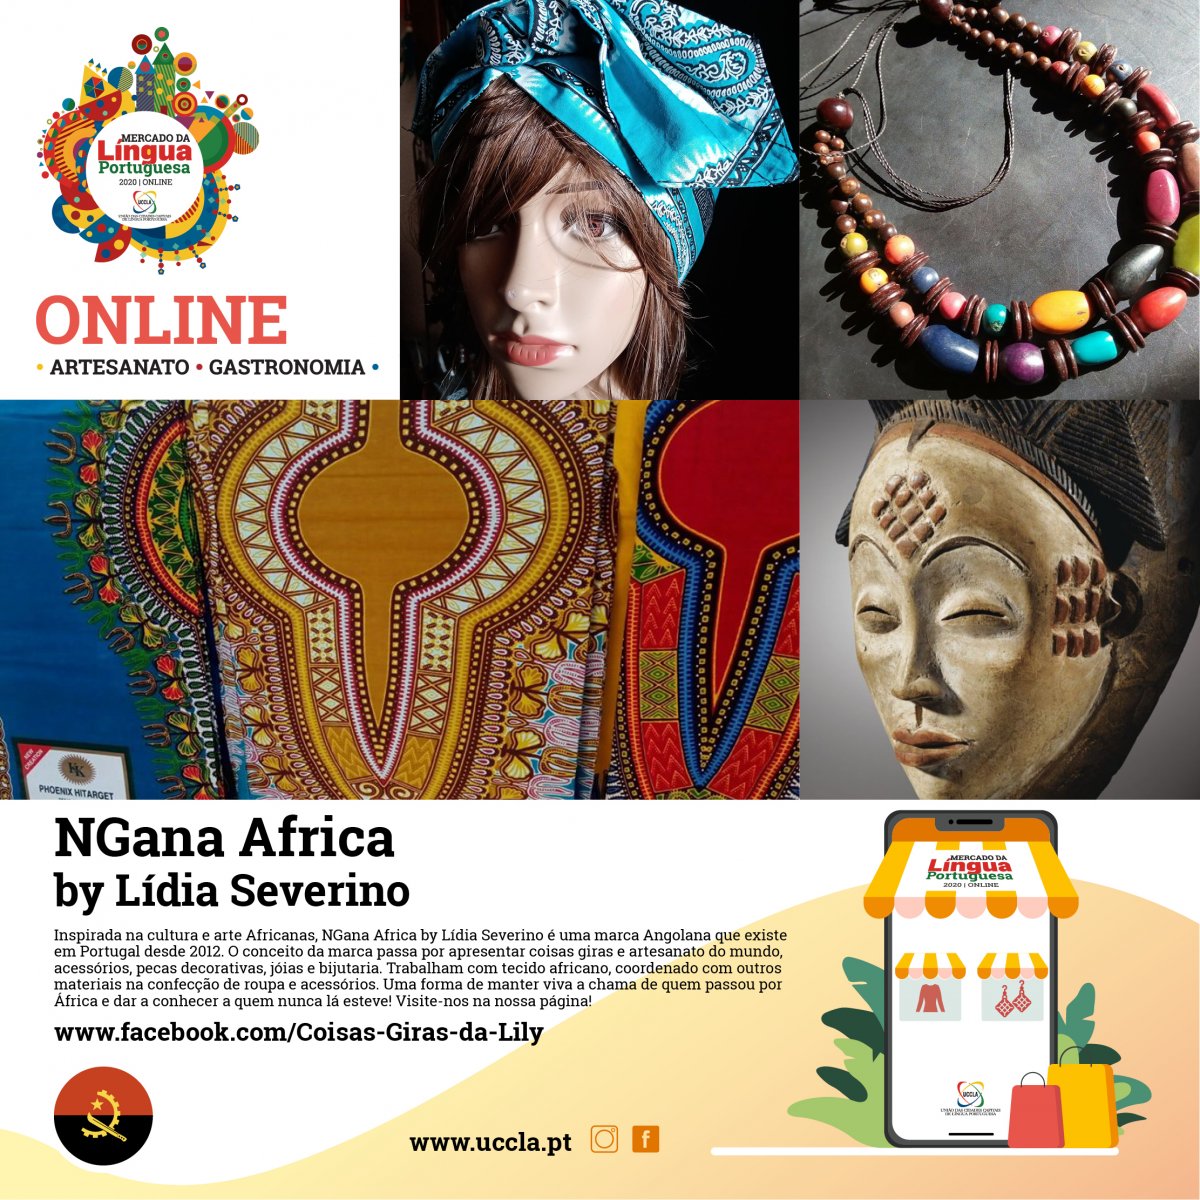 NGana Africa by Lídia Severino